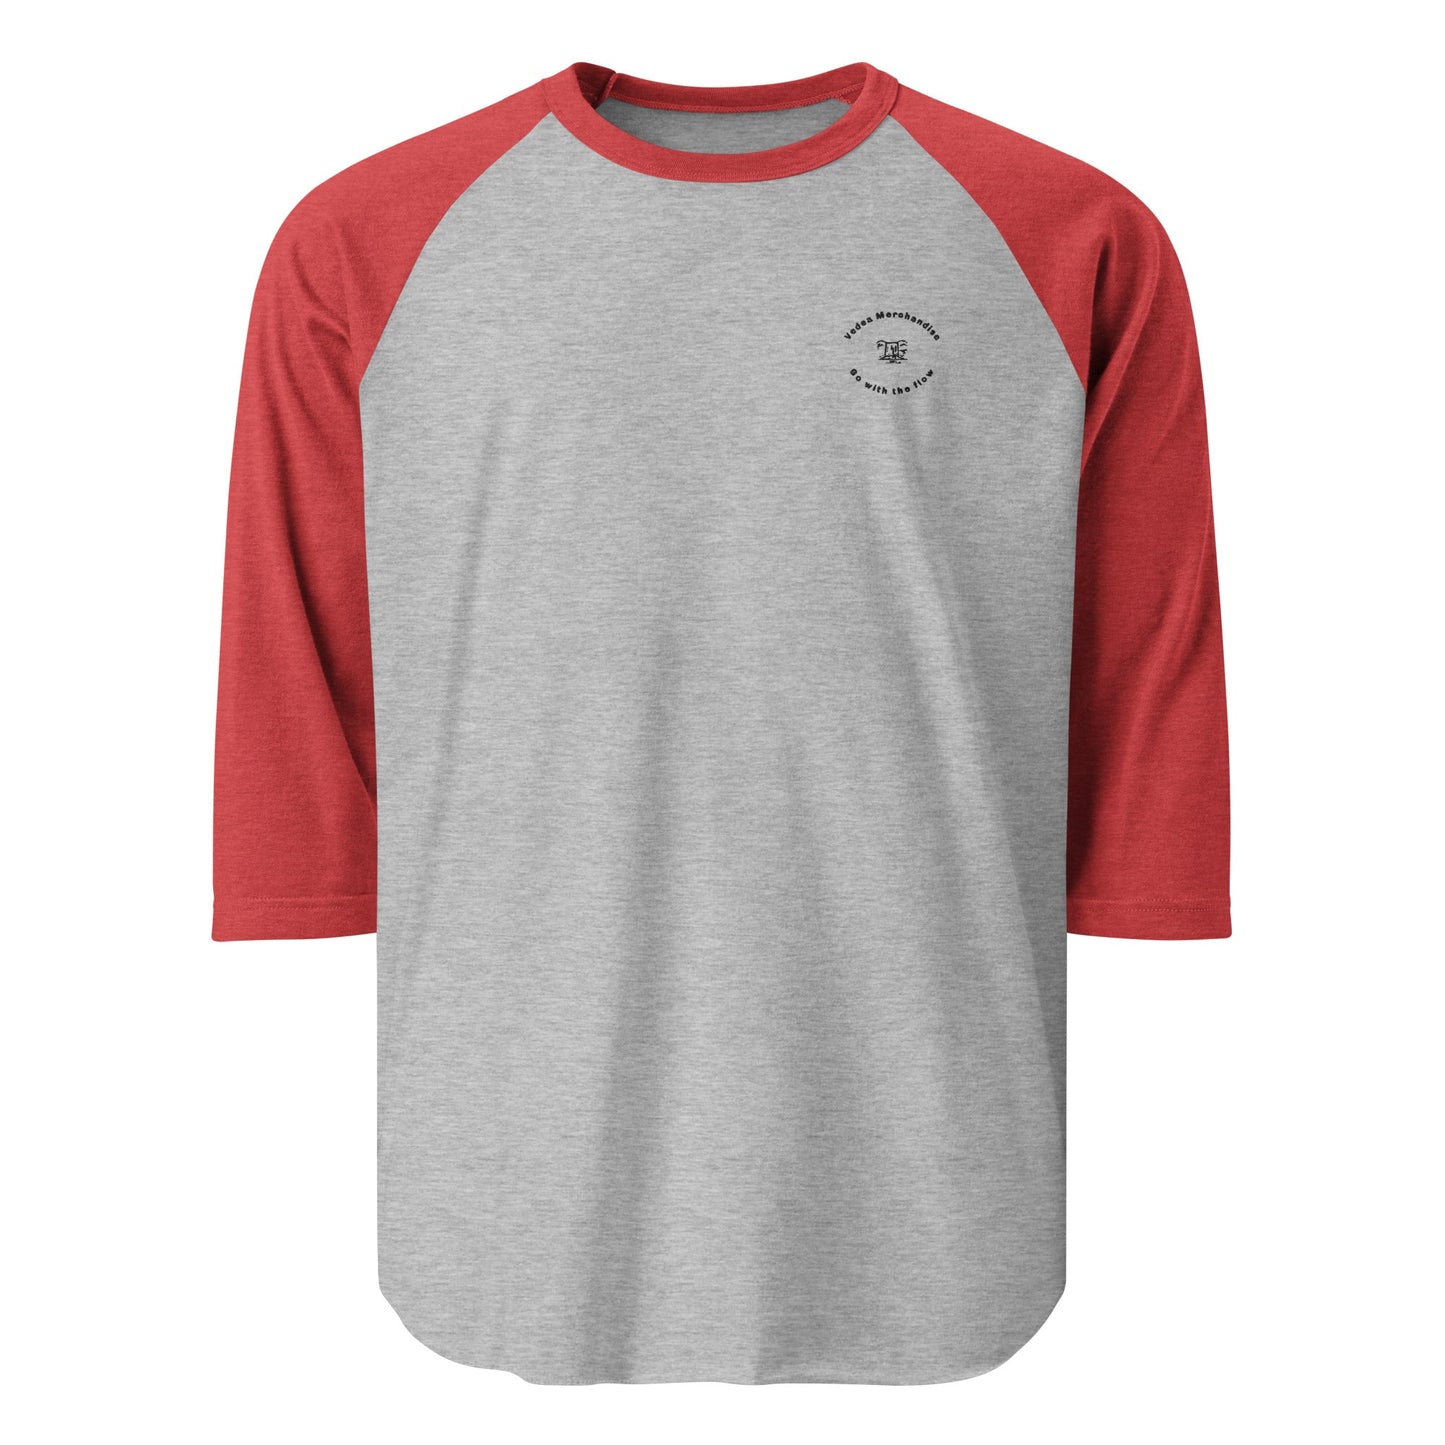 3/4 sleeve raglan shirt - Vedea MerchandiseHeather Grey/Heather RedXS